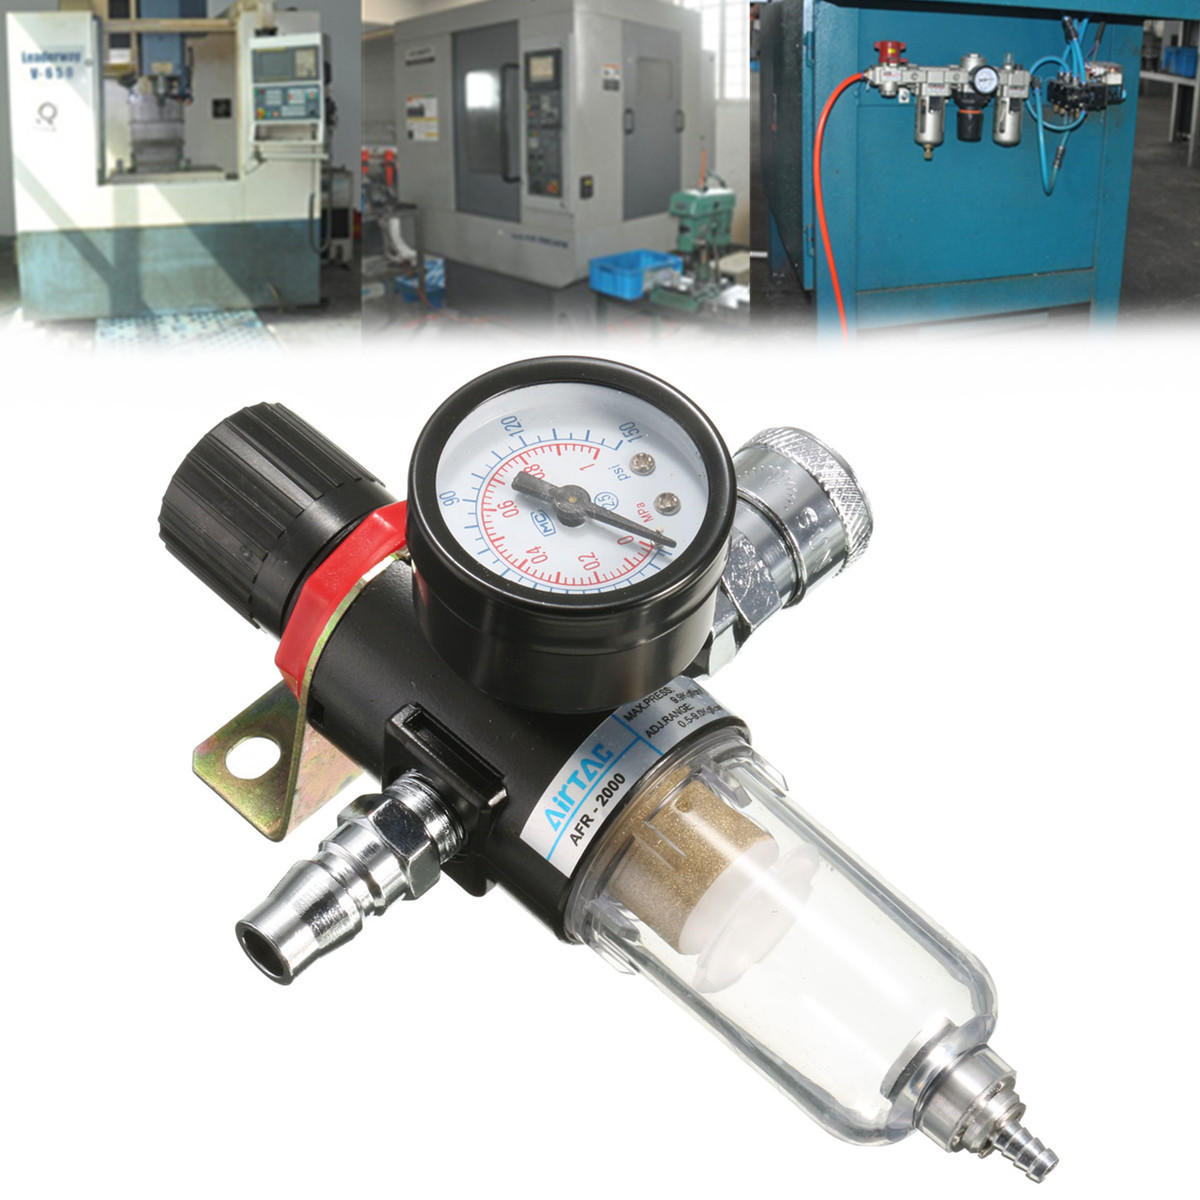 1/4" Air Compressor Filter Water Separator Trap Tool Kit Regulator Gauge AFR2000 